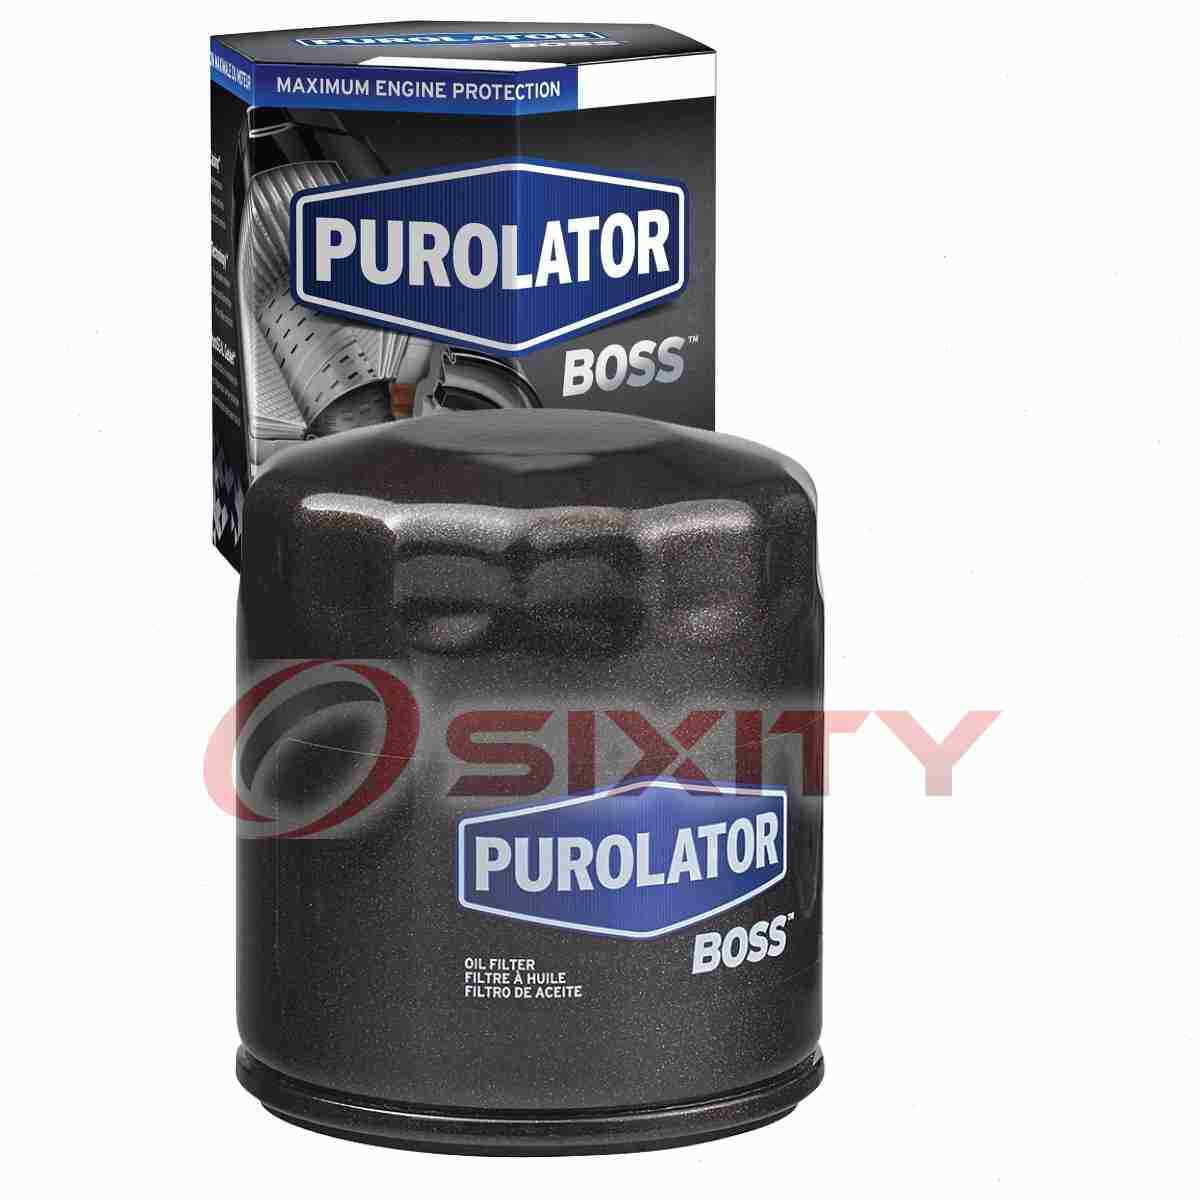 Purolator BOSS Engine Oil Filter for 2007 Chevrolet Silverado 2500 HD eu